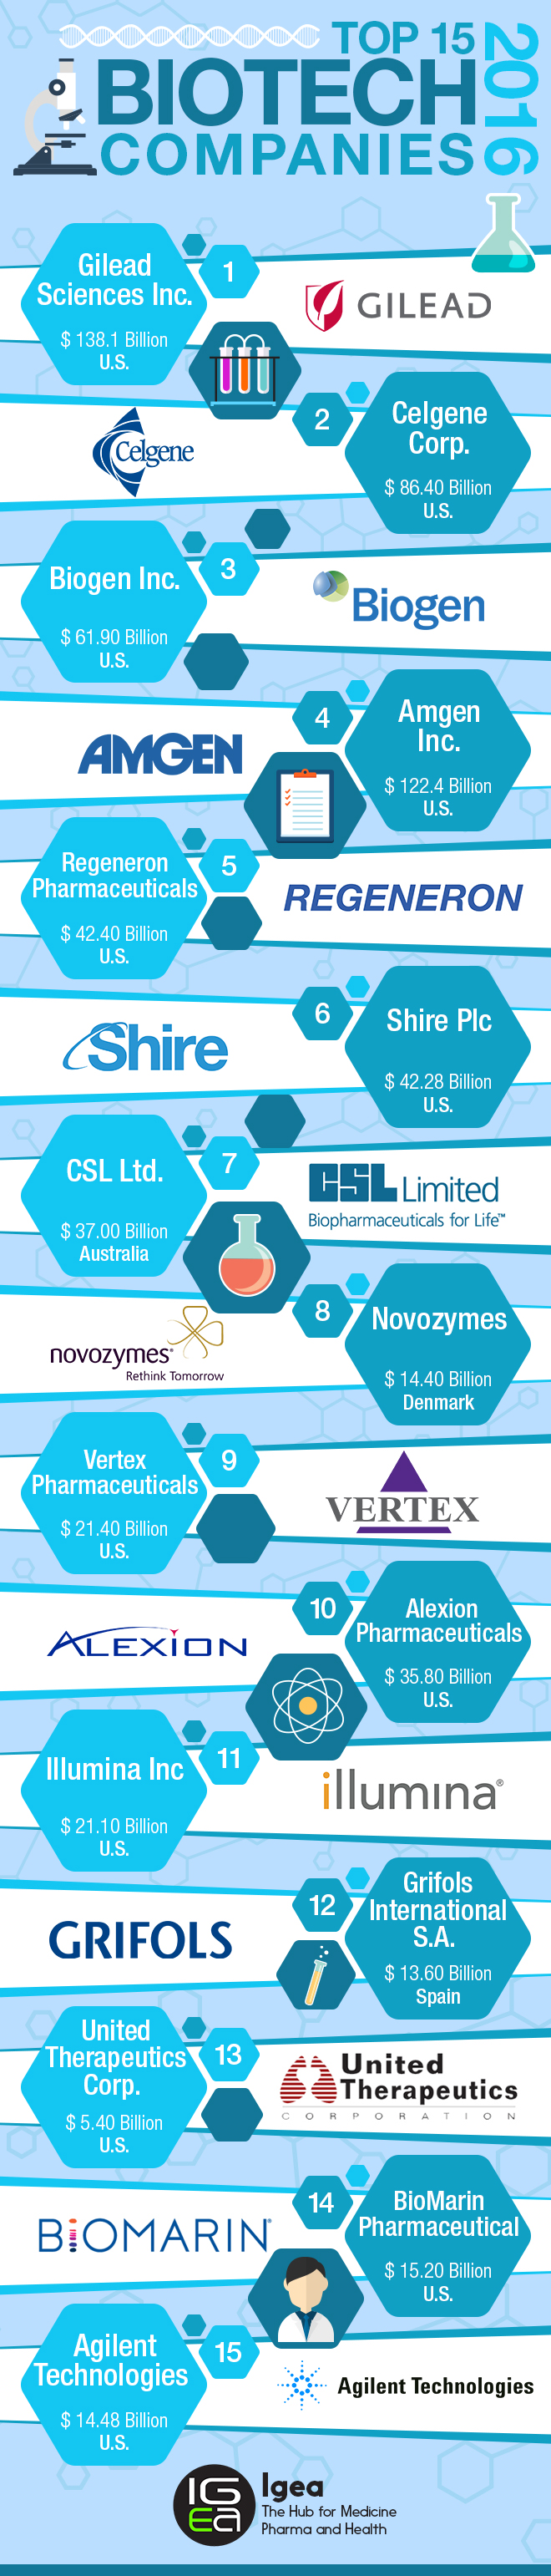 Top 15 biotech companies 2016 - Igeahub.com - Luca Dezzani